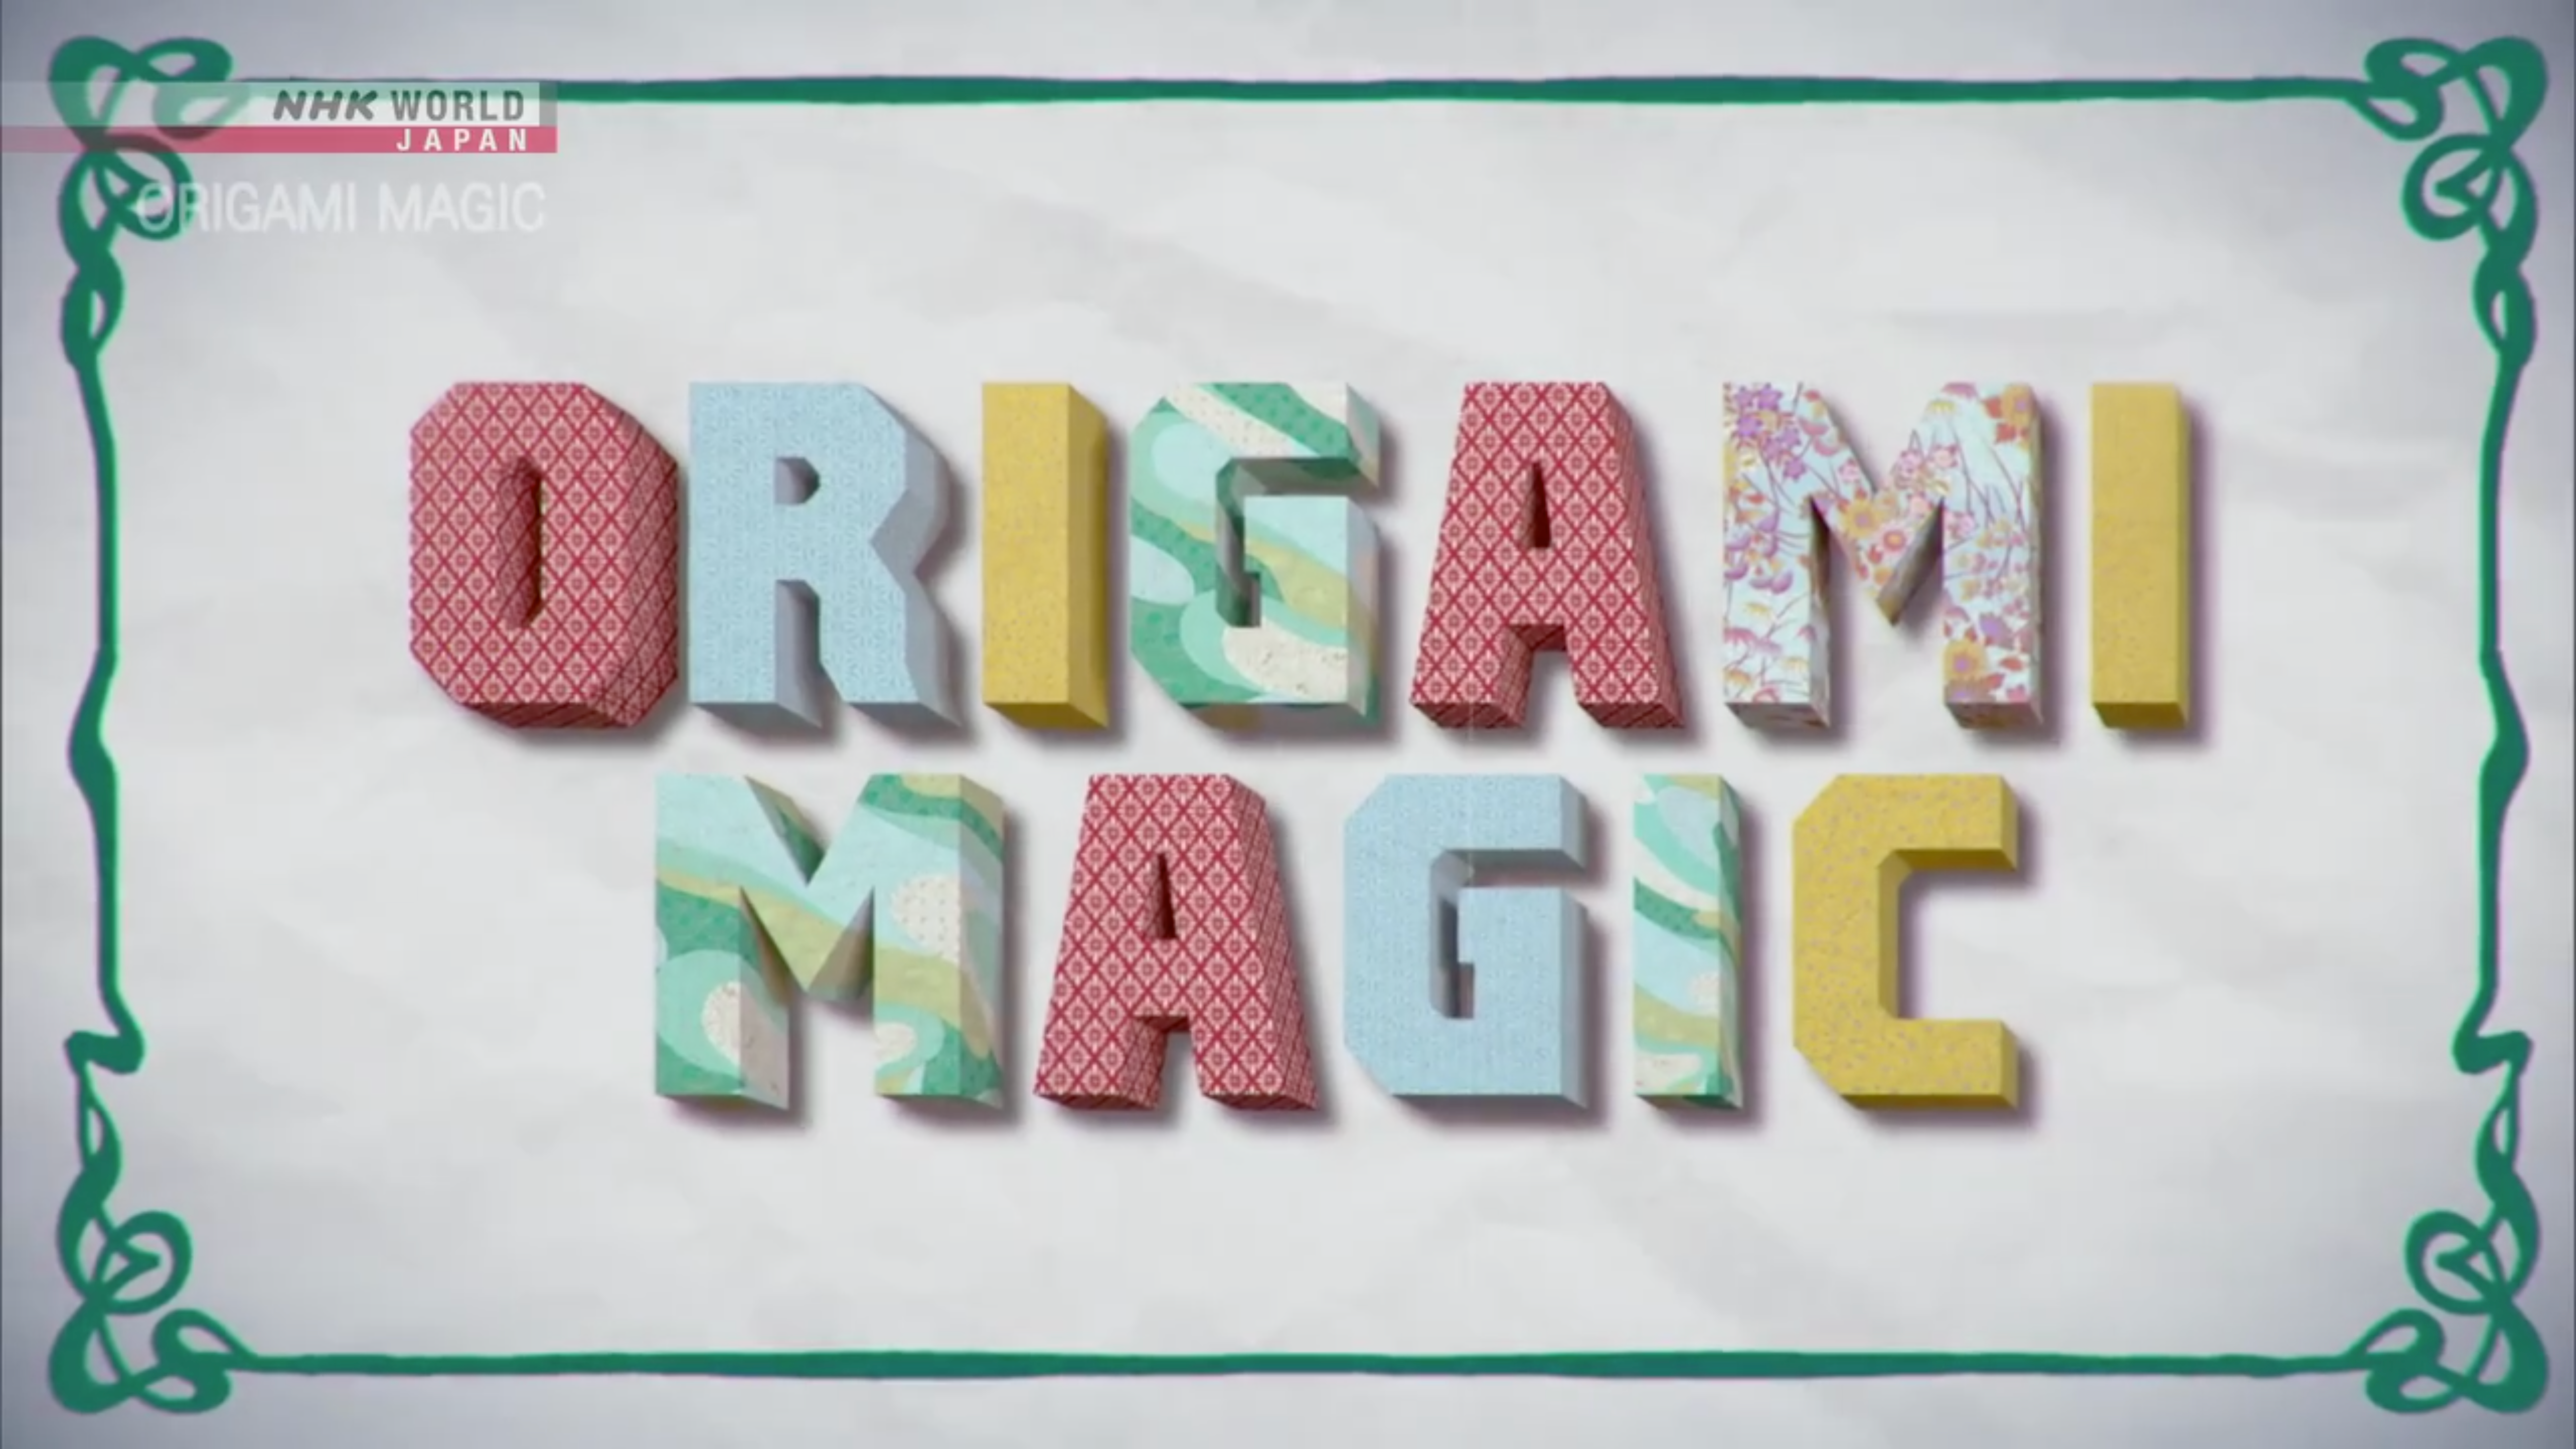 "Origami Magic" Segment on NHK Japan